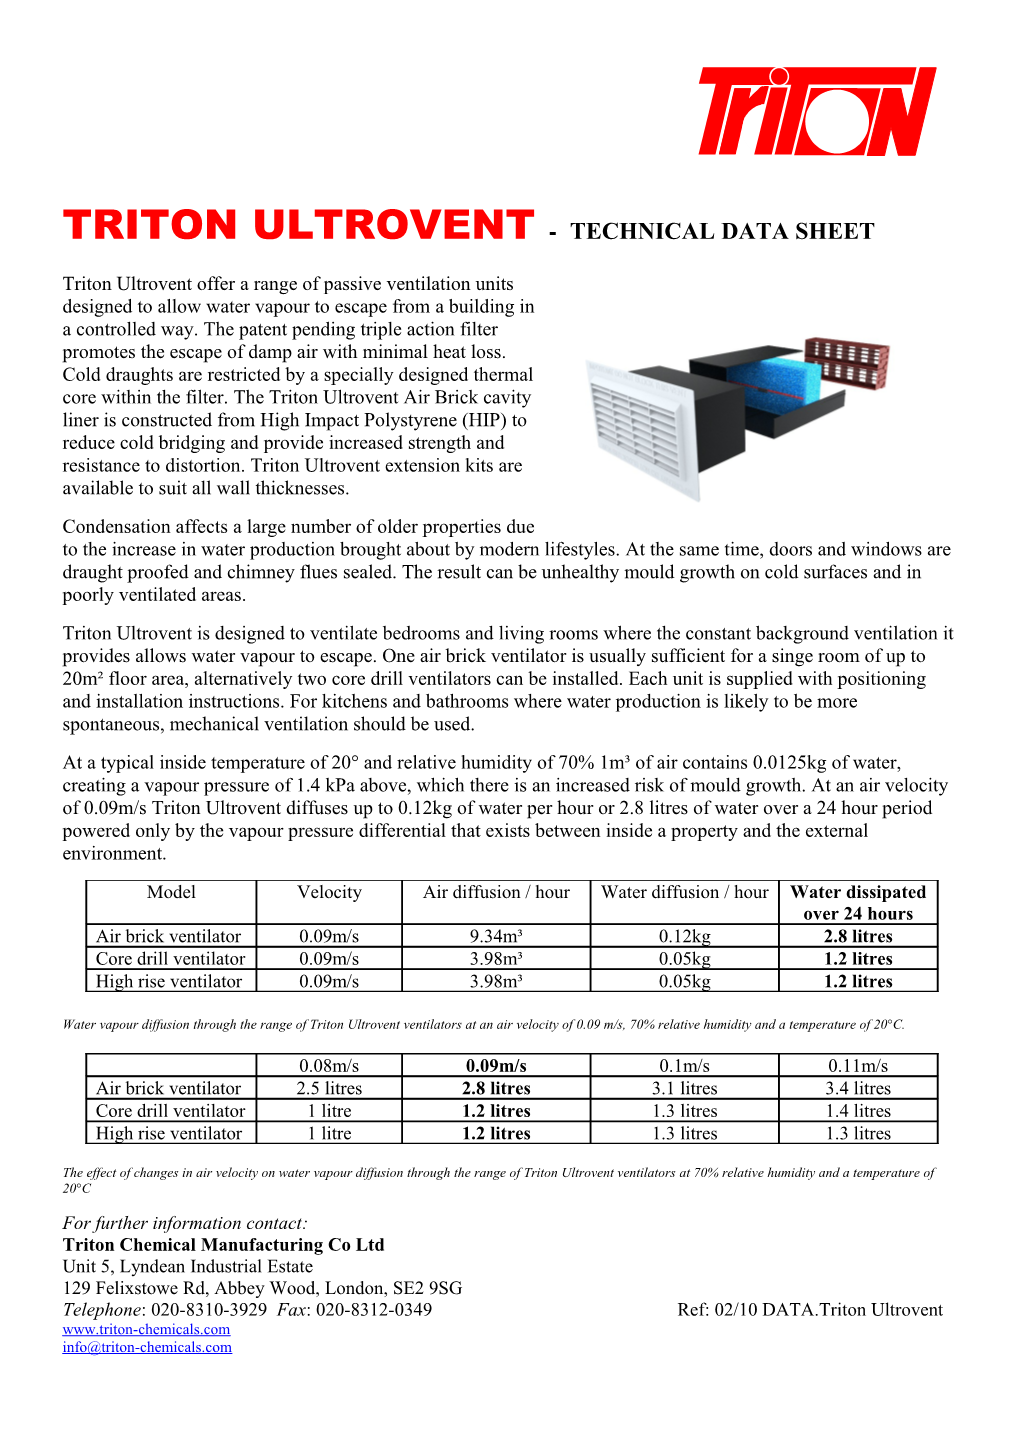 Triton Ultrovent - Technical Data Sheet